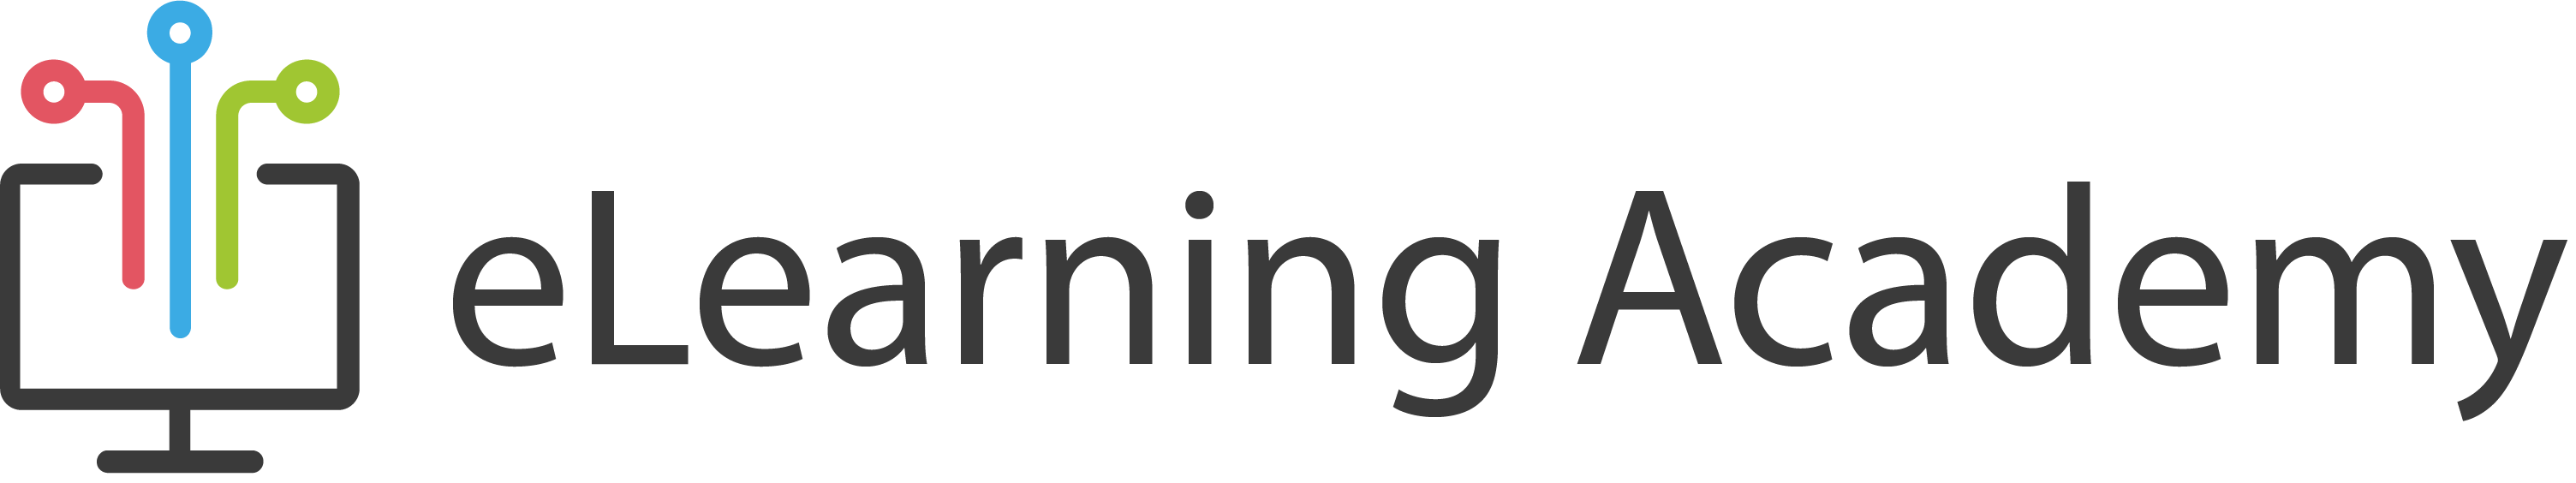 Elearning Academy logo